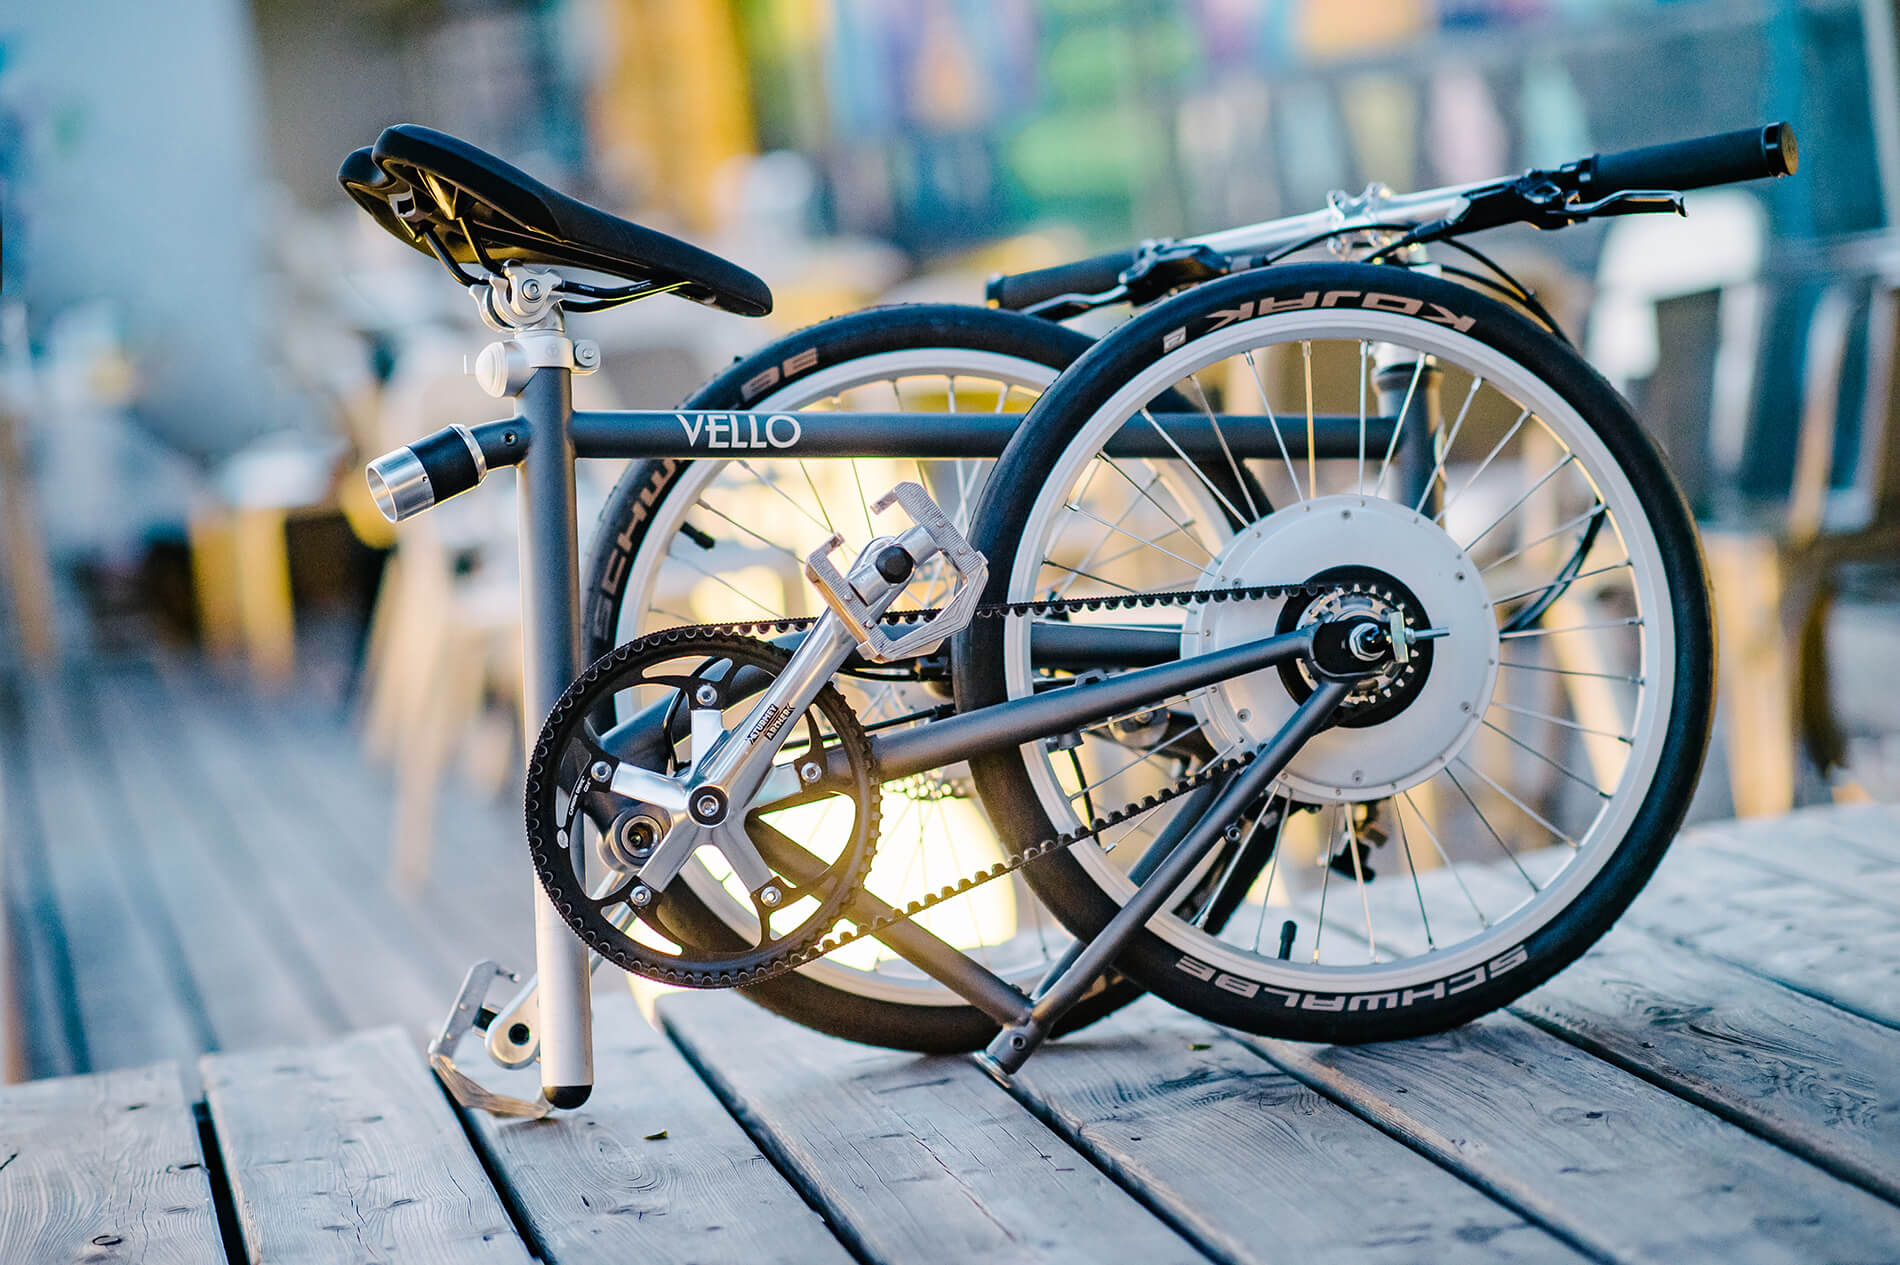 The lightweight folding bike